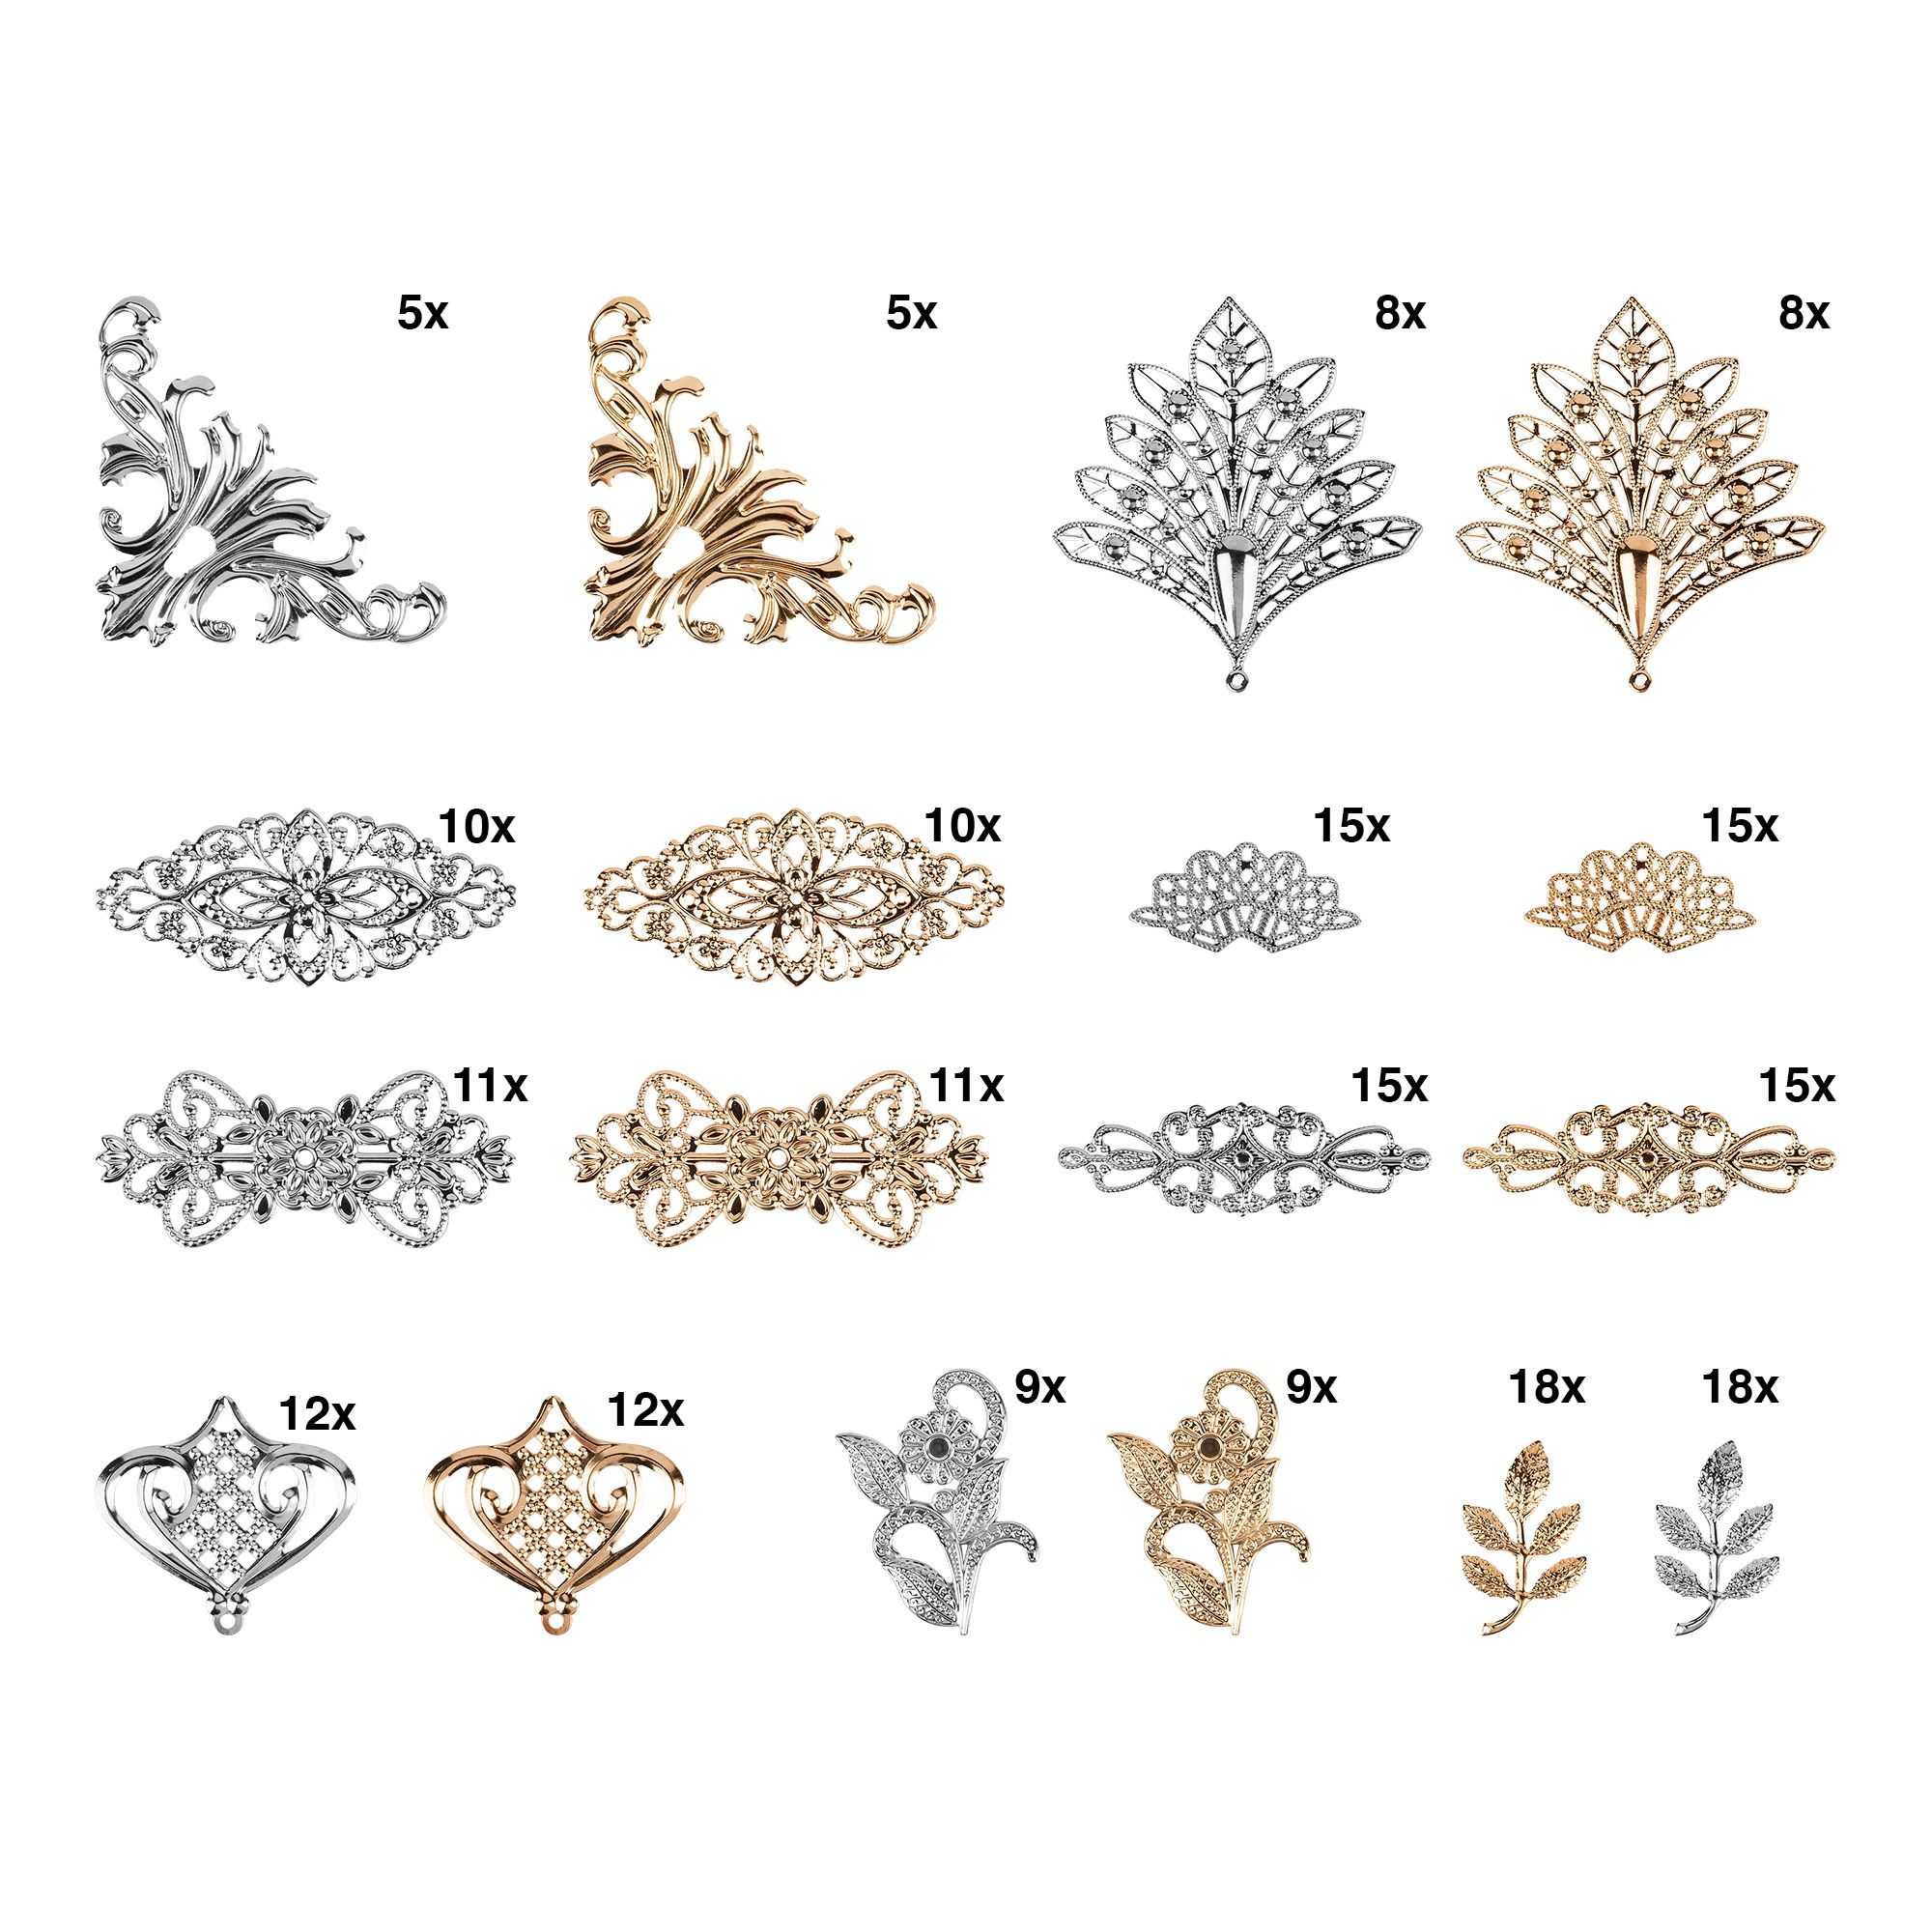 KARIN JITTENMEIER Dekorations-Set Metall-Ornamente verschiedene